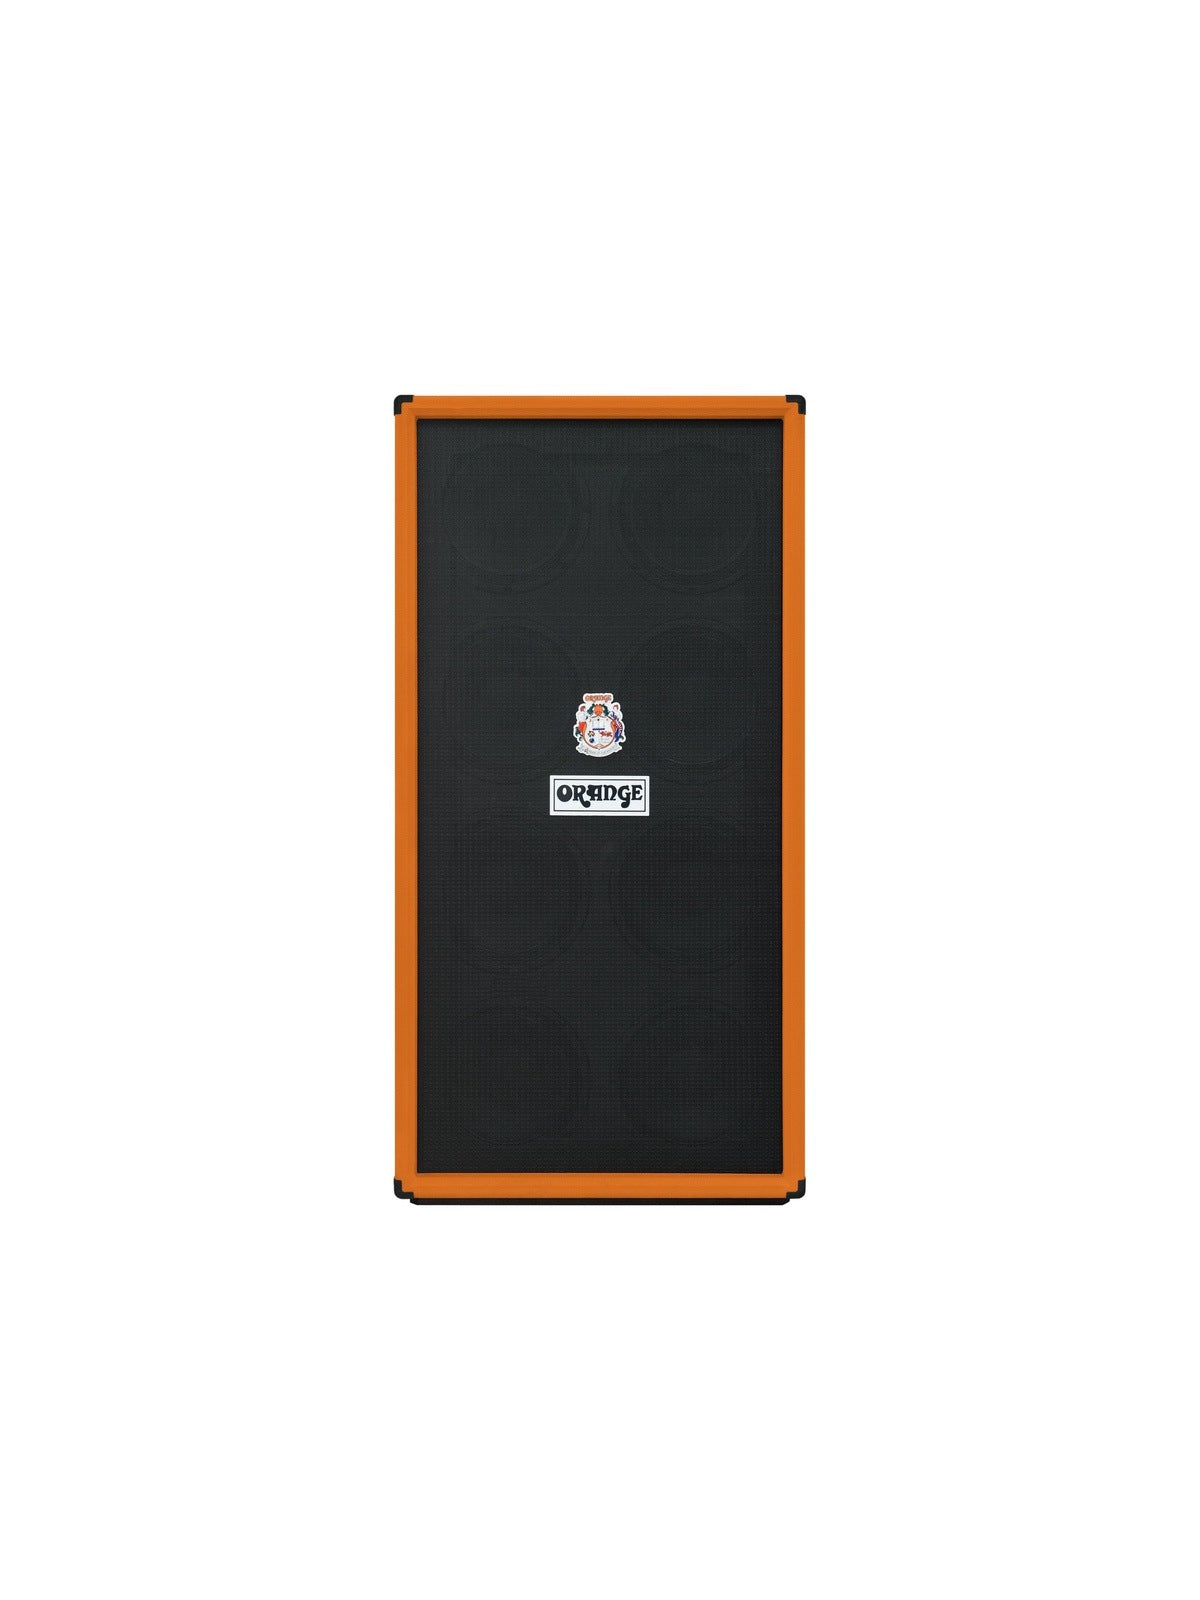 Orange OBC810 Bass Cabinet